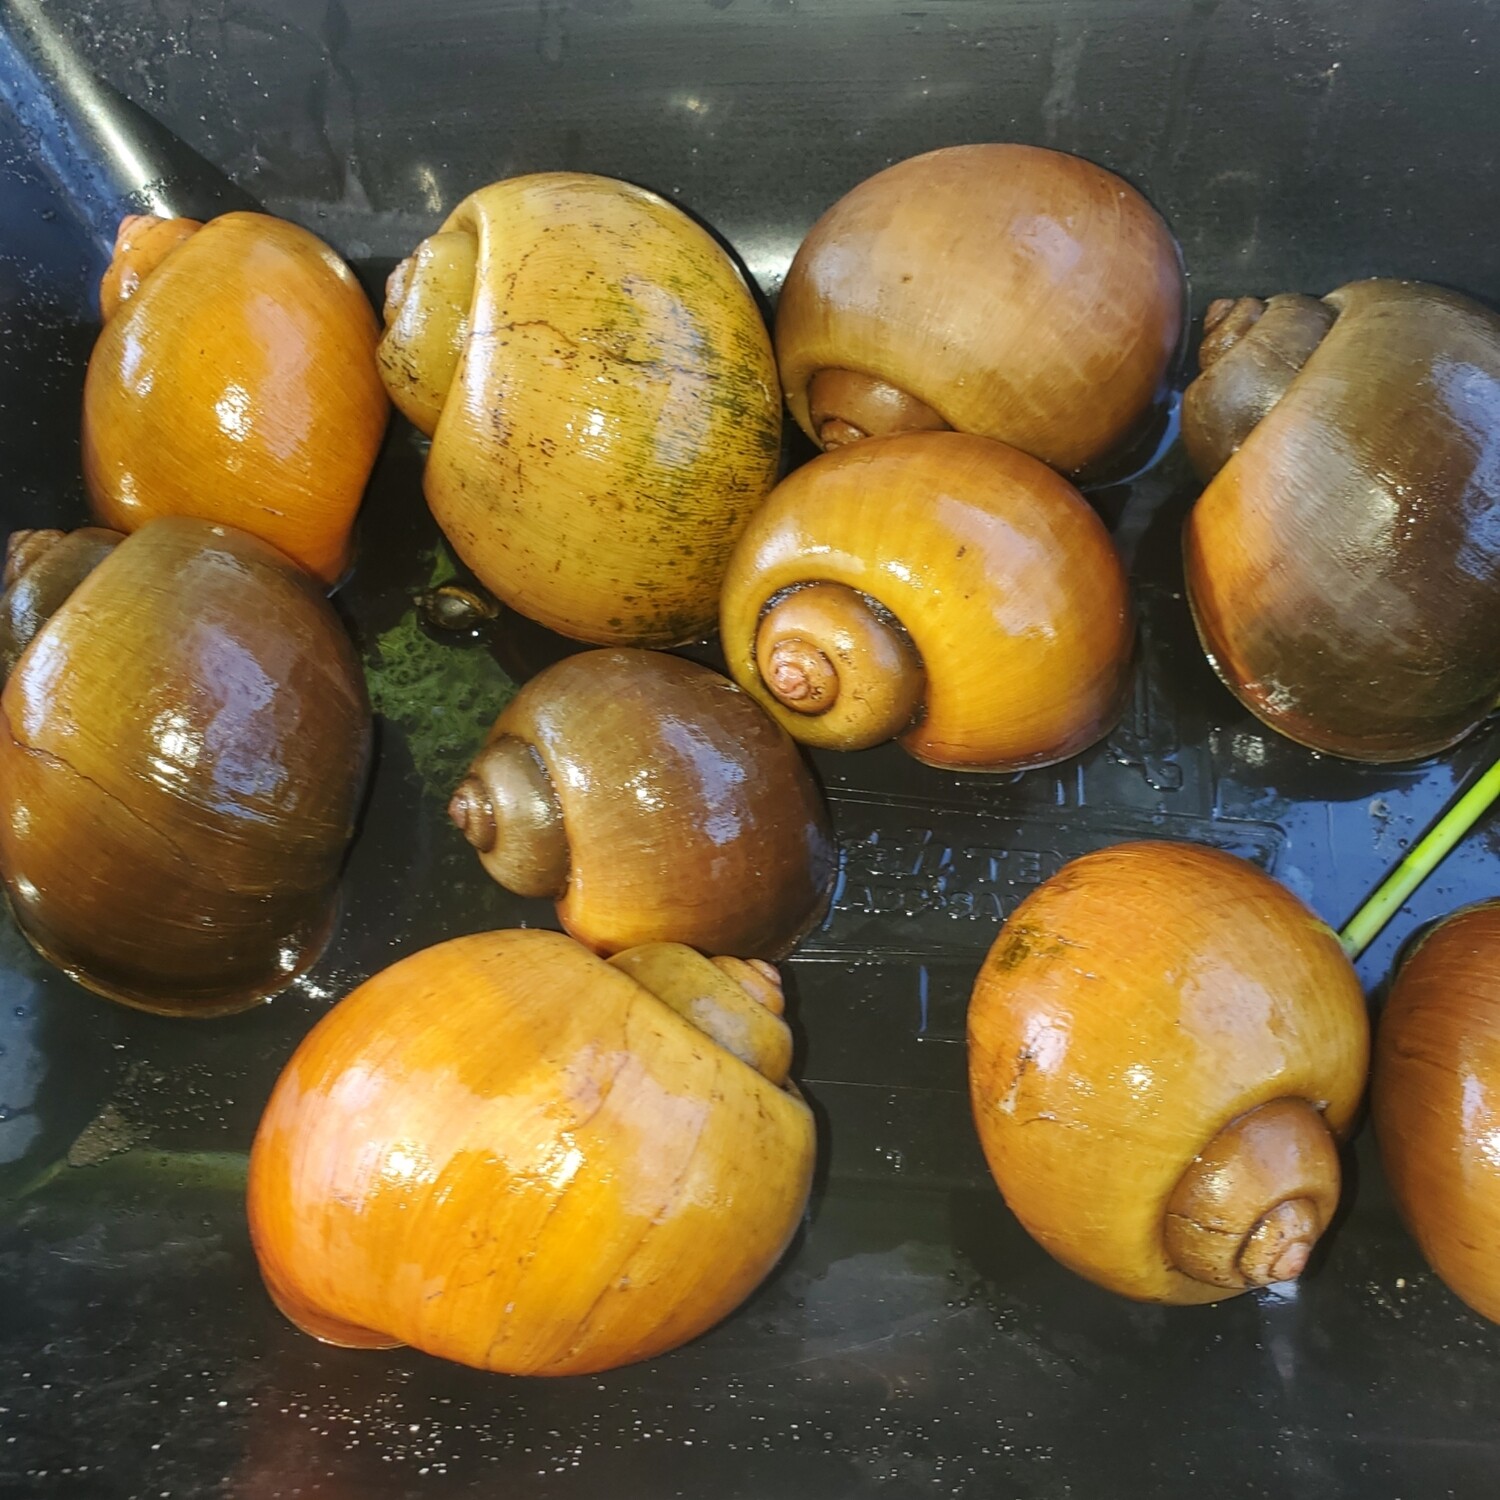 Live Medium snails by the pound